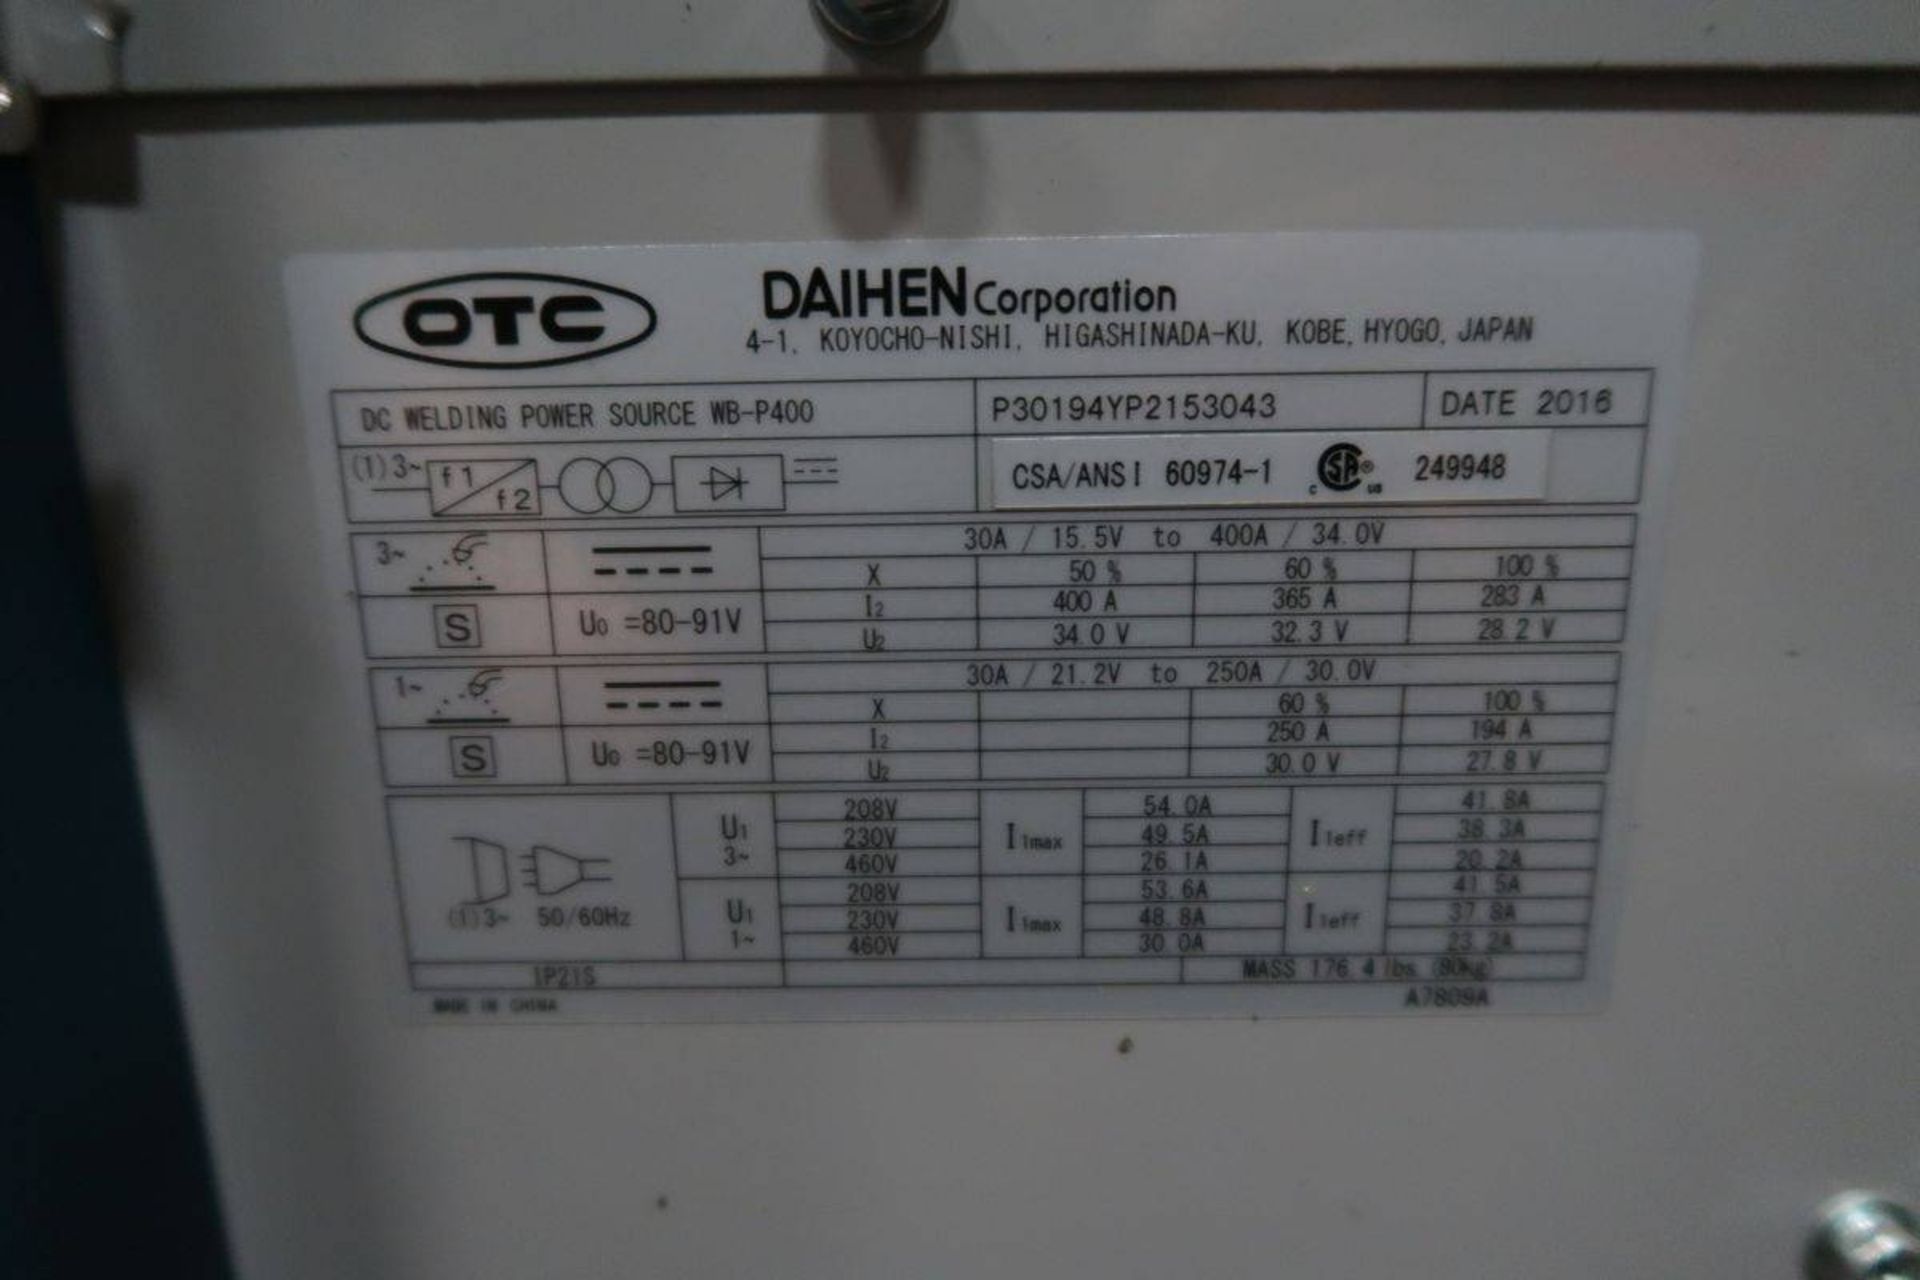 2016 OTC P400 400A Welding Power Source - Image 4 of 5